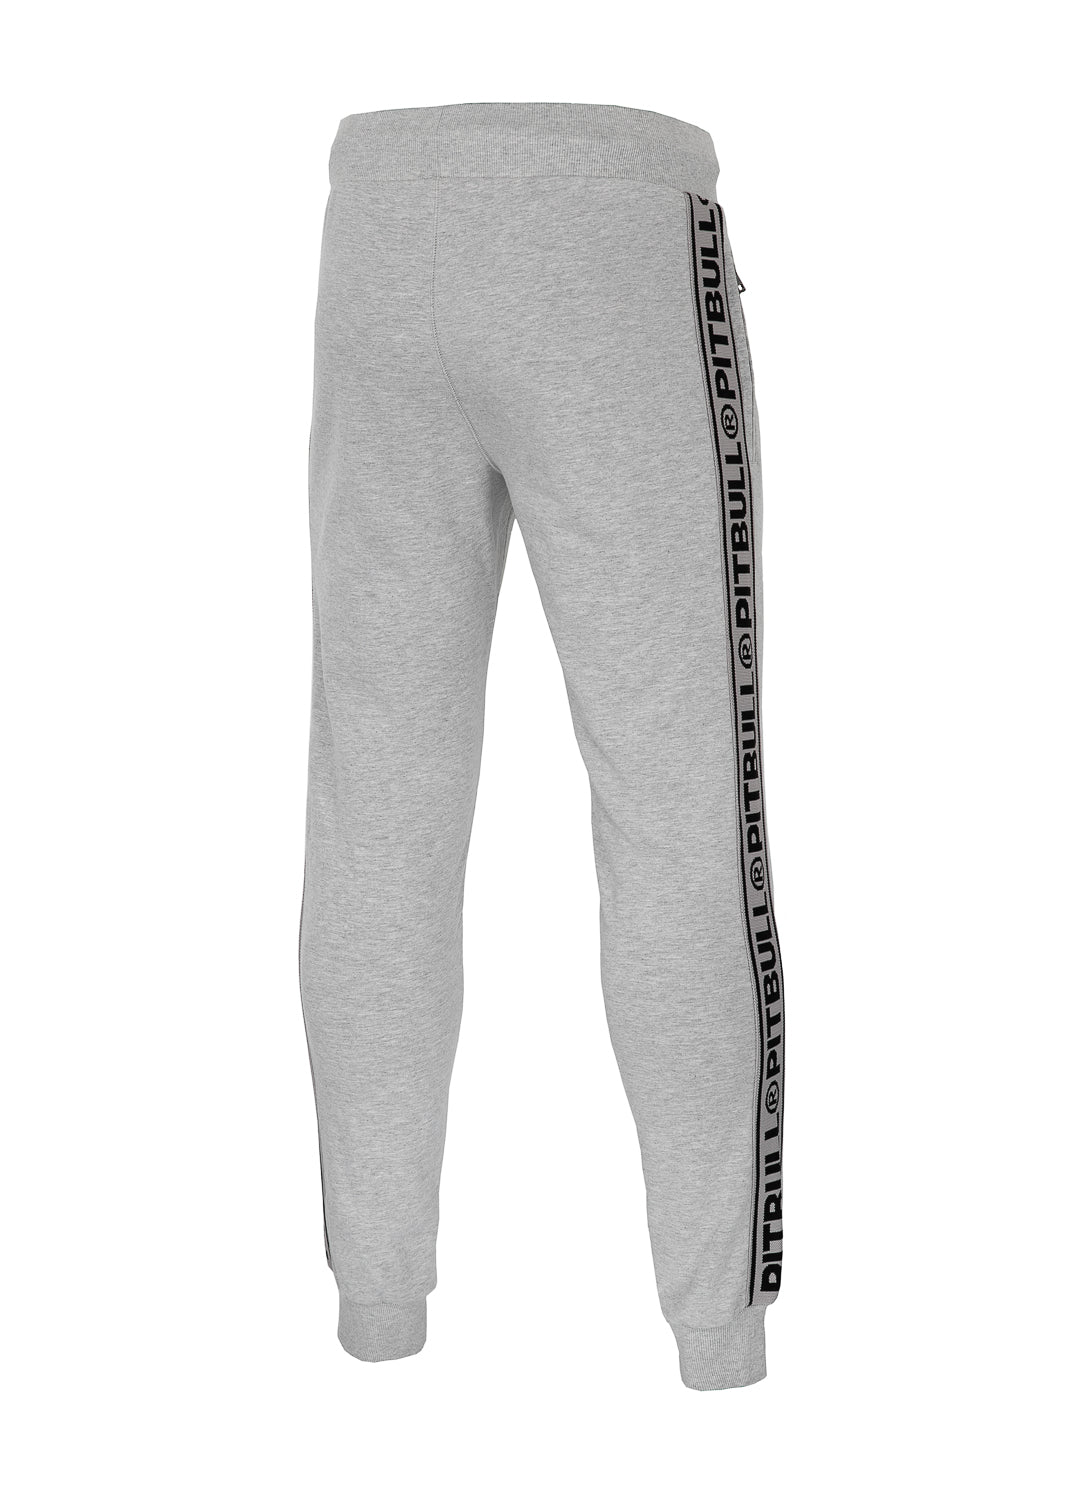 Jogging Pants French Terry VIGO Grey - Pitbull West Coast International Store 